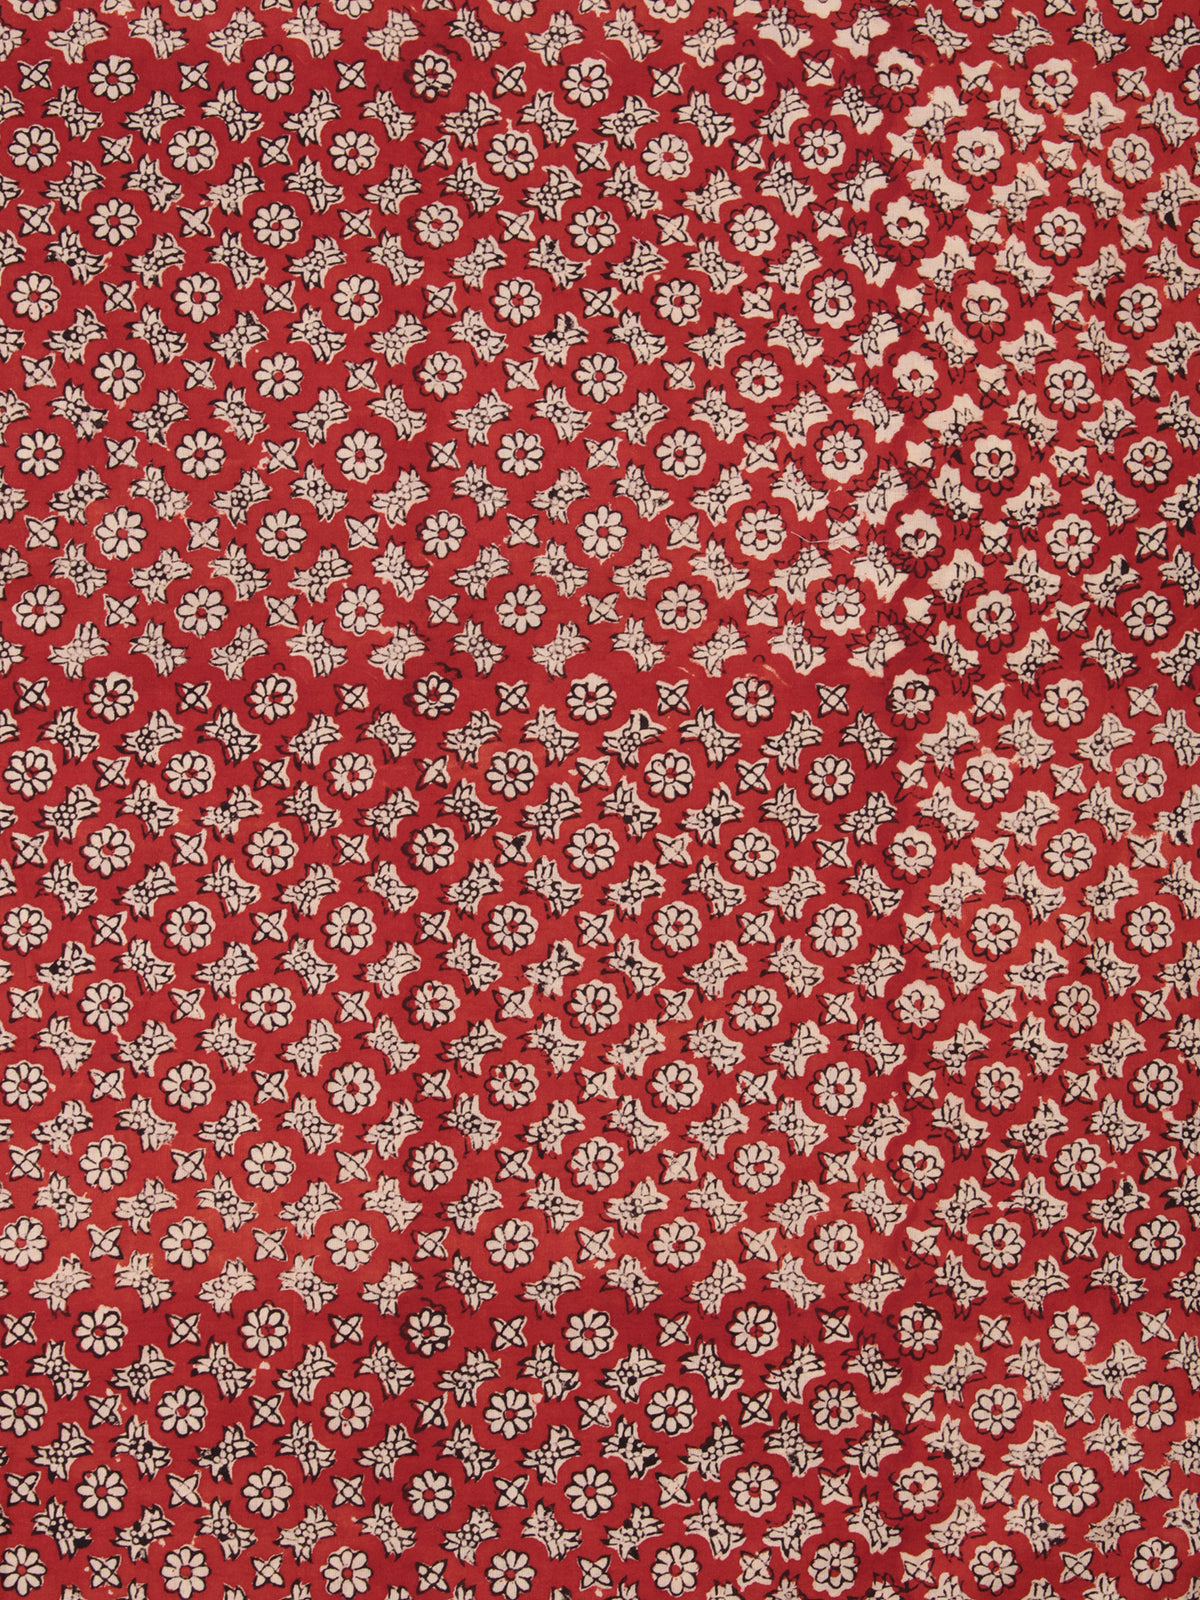 Rustic Red Hand Block Printed Cotton Fabric Per Meter - F001F2442